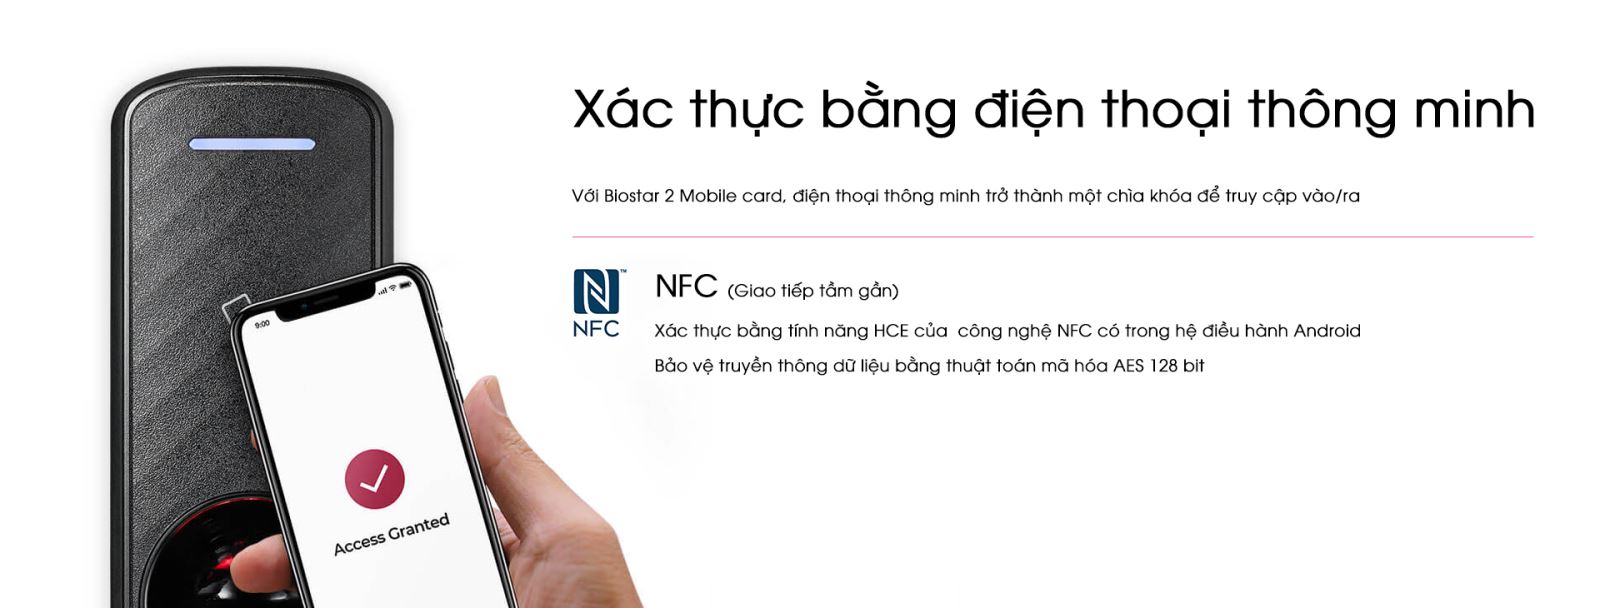 cong-nghe-NFC-xac-thuc-bang-smartphone